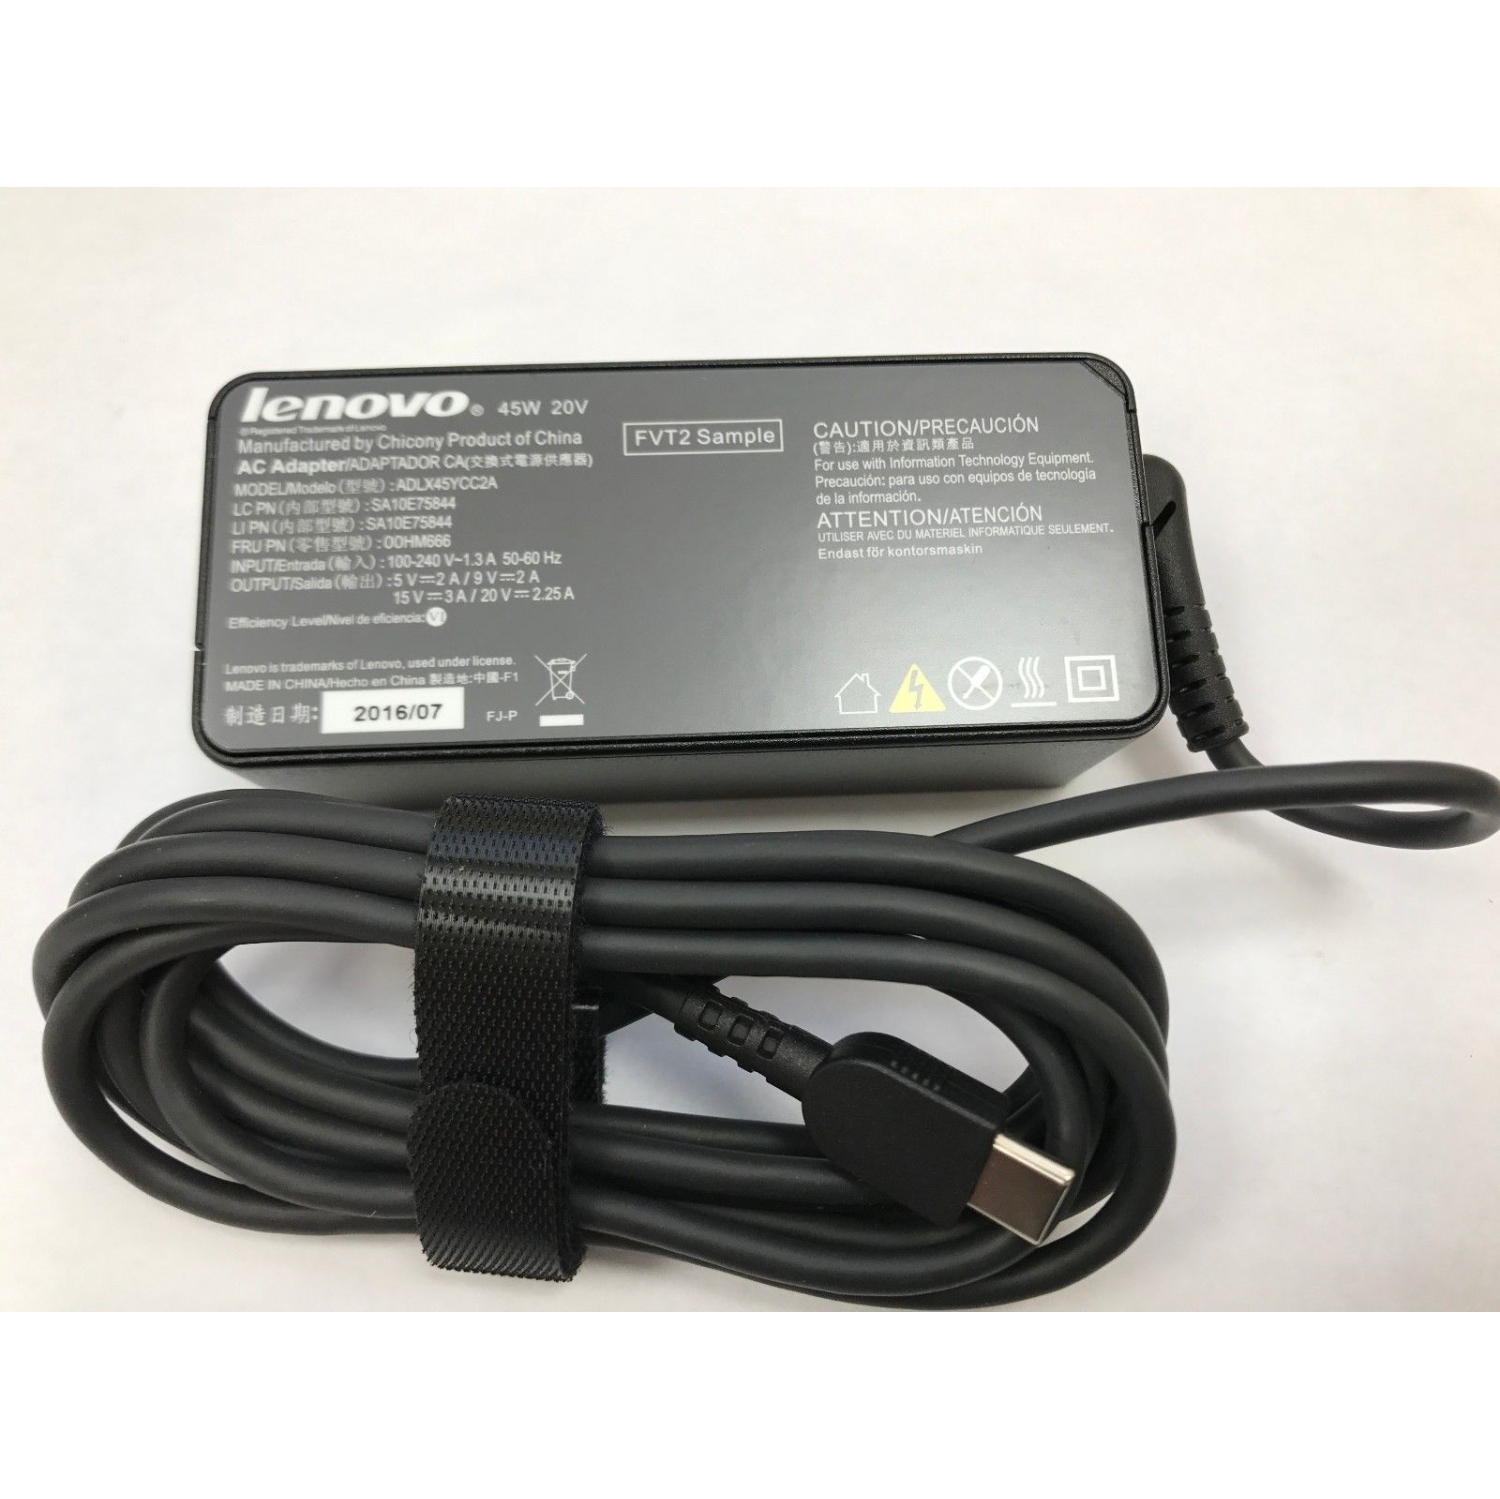 New Genuine Lenovo Ideapad 720S 720S-13 720S-13IKB USB-C Type-C AC Adapter Charger 45W